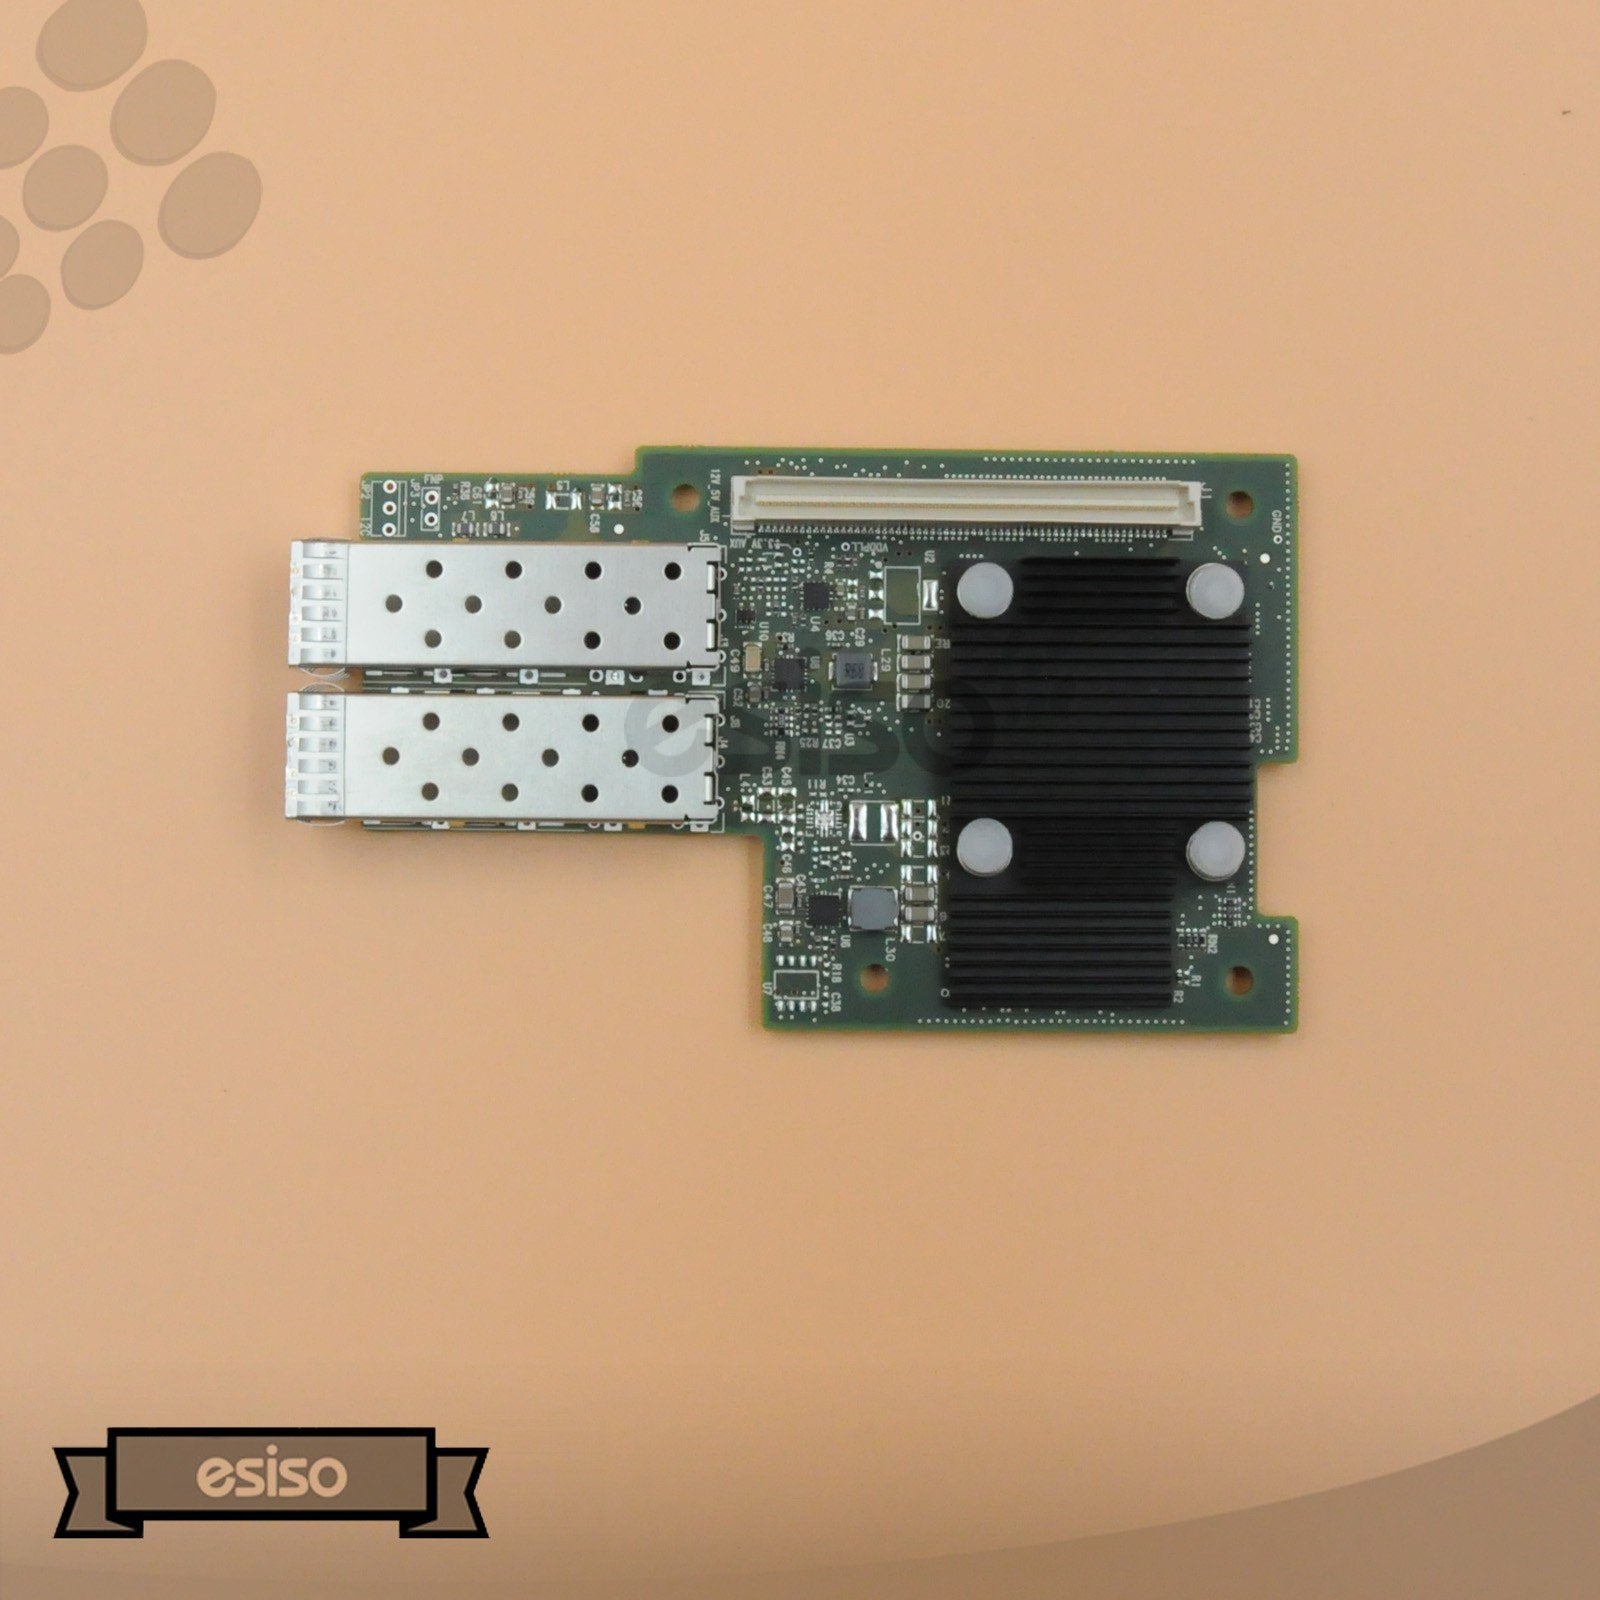 MCX4421A-ACQN MELLANOX CX4421A CONNECTX-4 LX DUAL PODT 25GBE SFP+OCP 2.0 ENTHERNET ADAPTER CARD